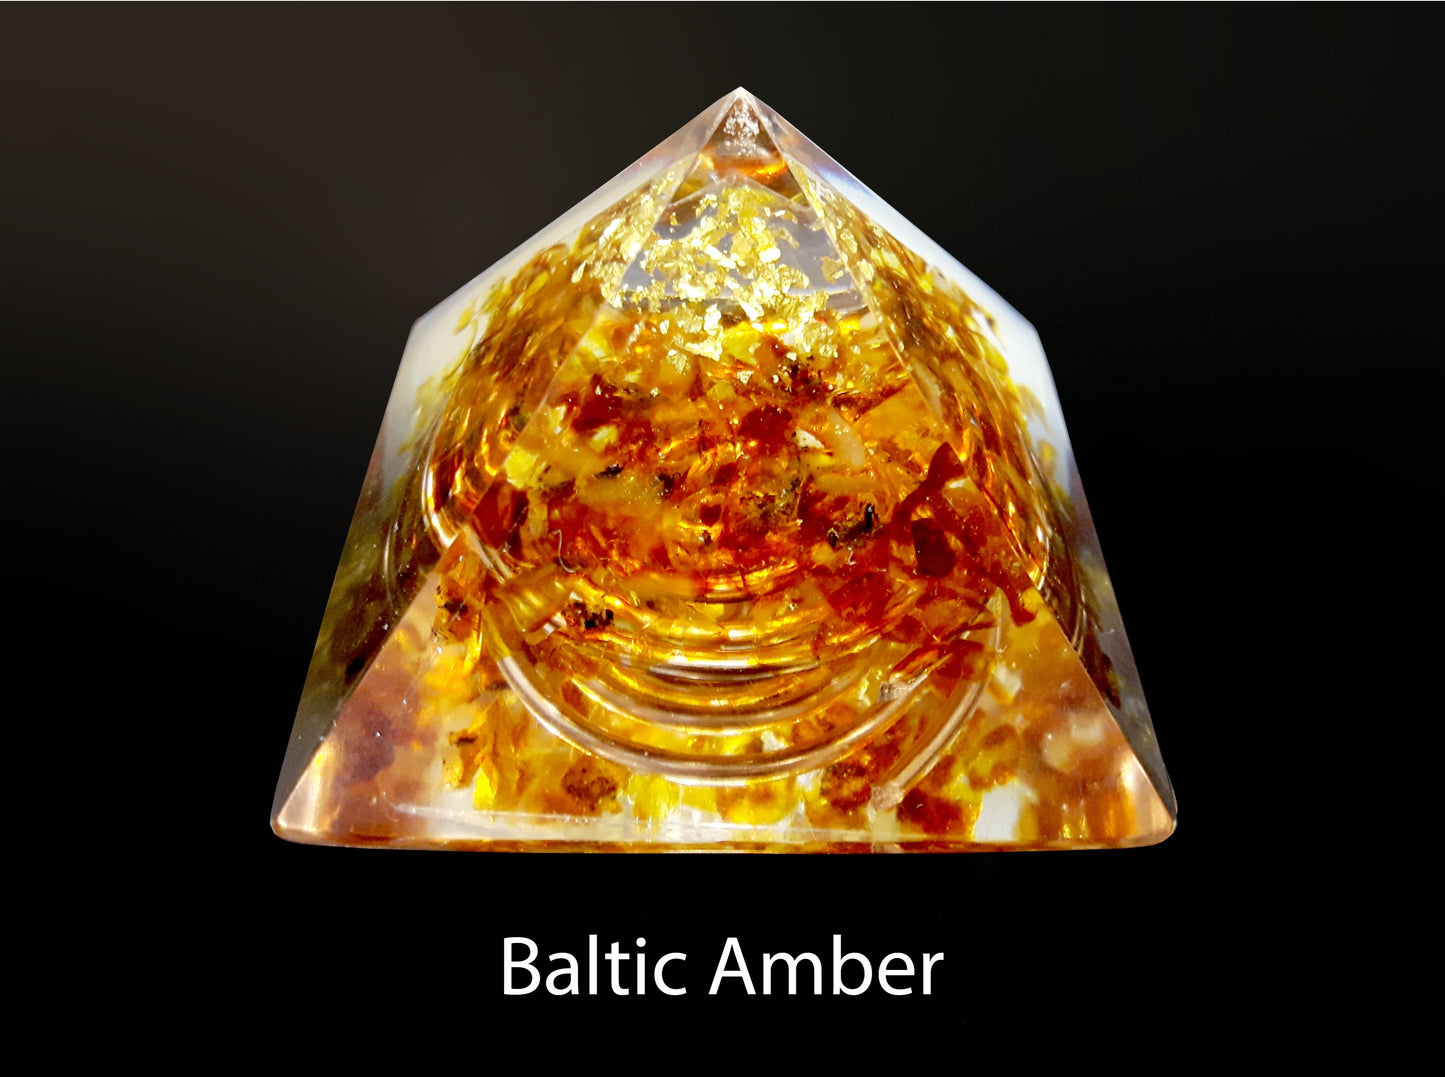 Orgonite Pyramid - Natural Baltic Amber and 24k gold, wealth, protection, reiki healing, meditation